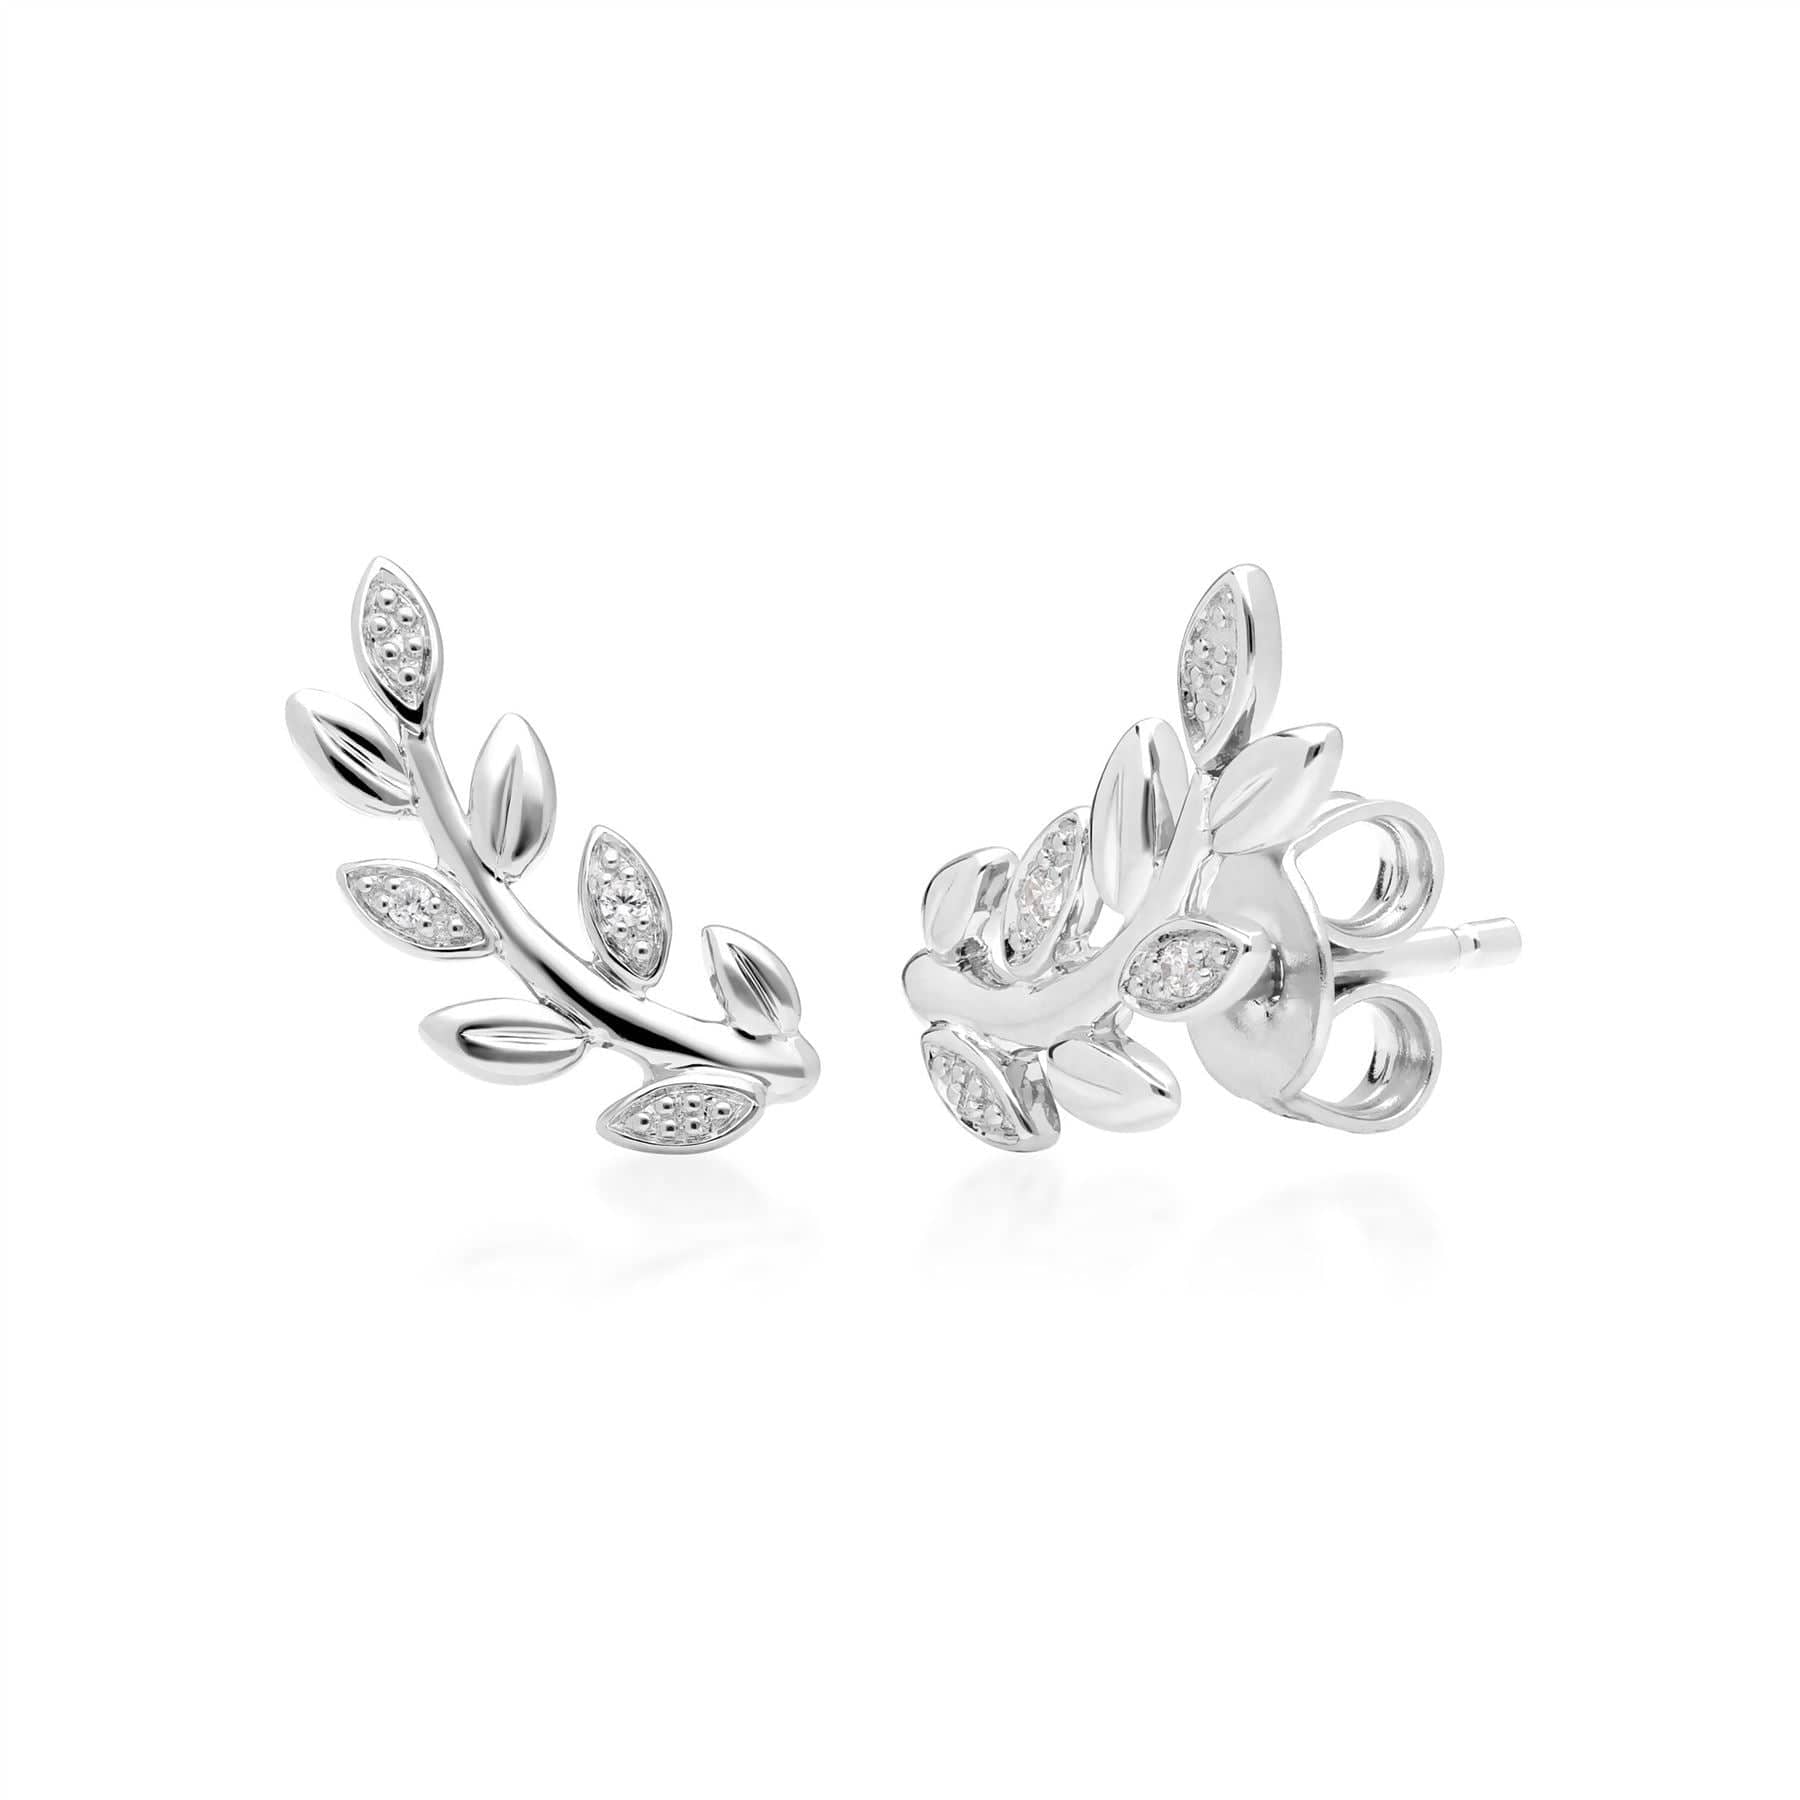 162E0273019-162R0397019 O Leaf Diamond Stud Earring & Ring Set in 9ct White Gold 2